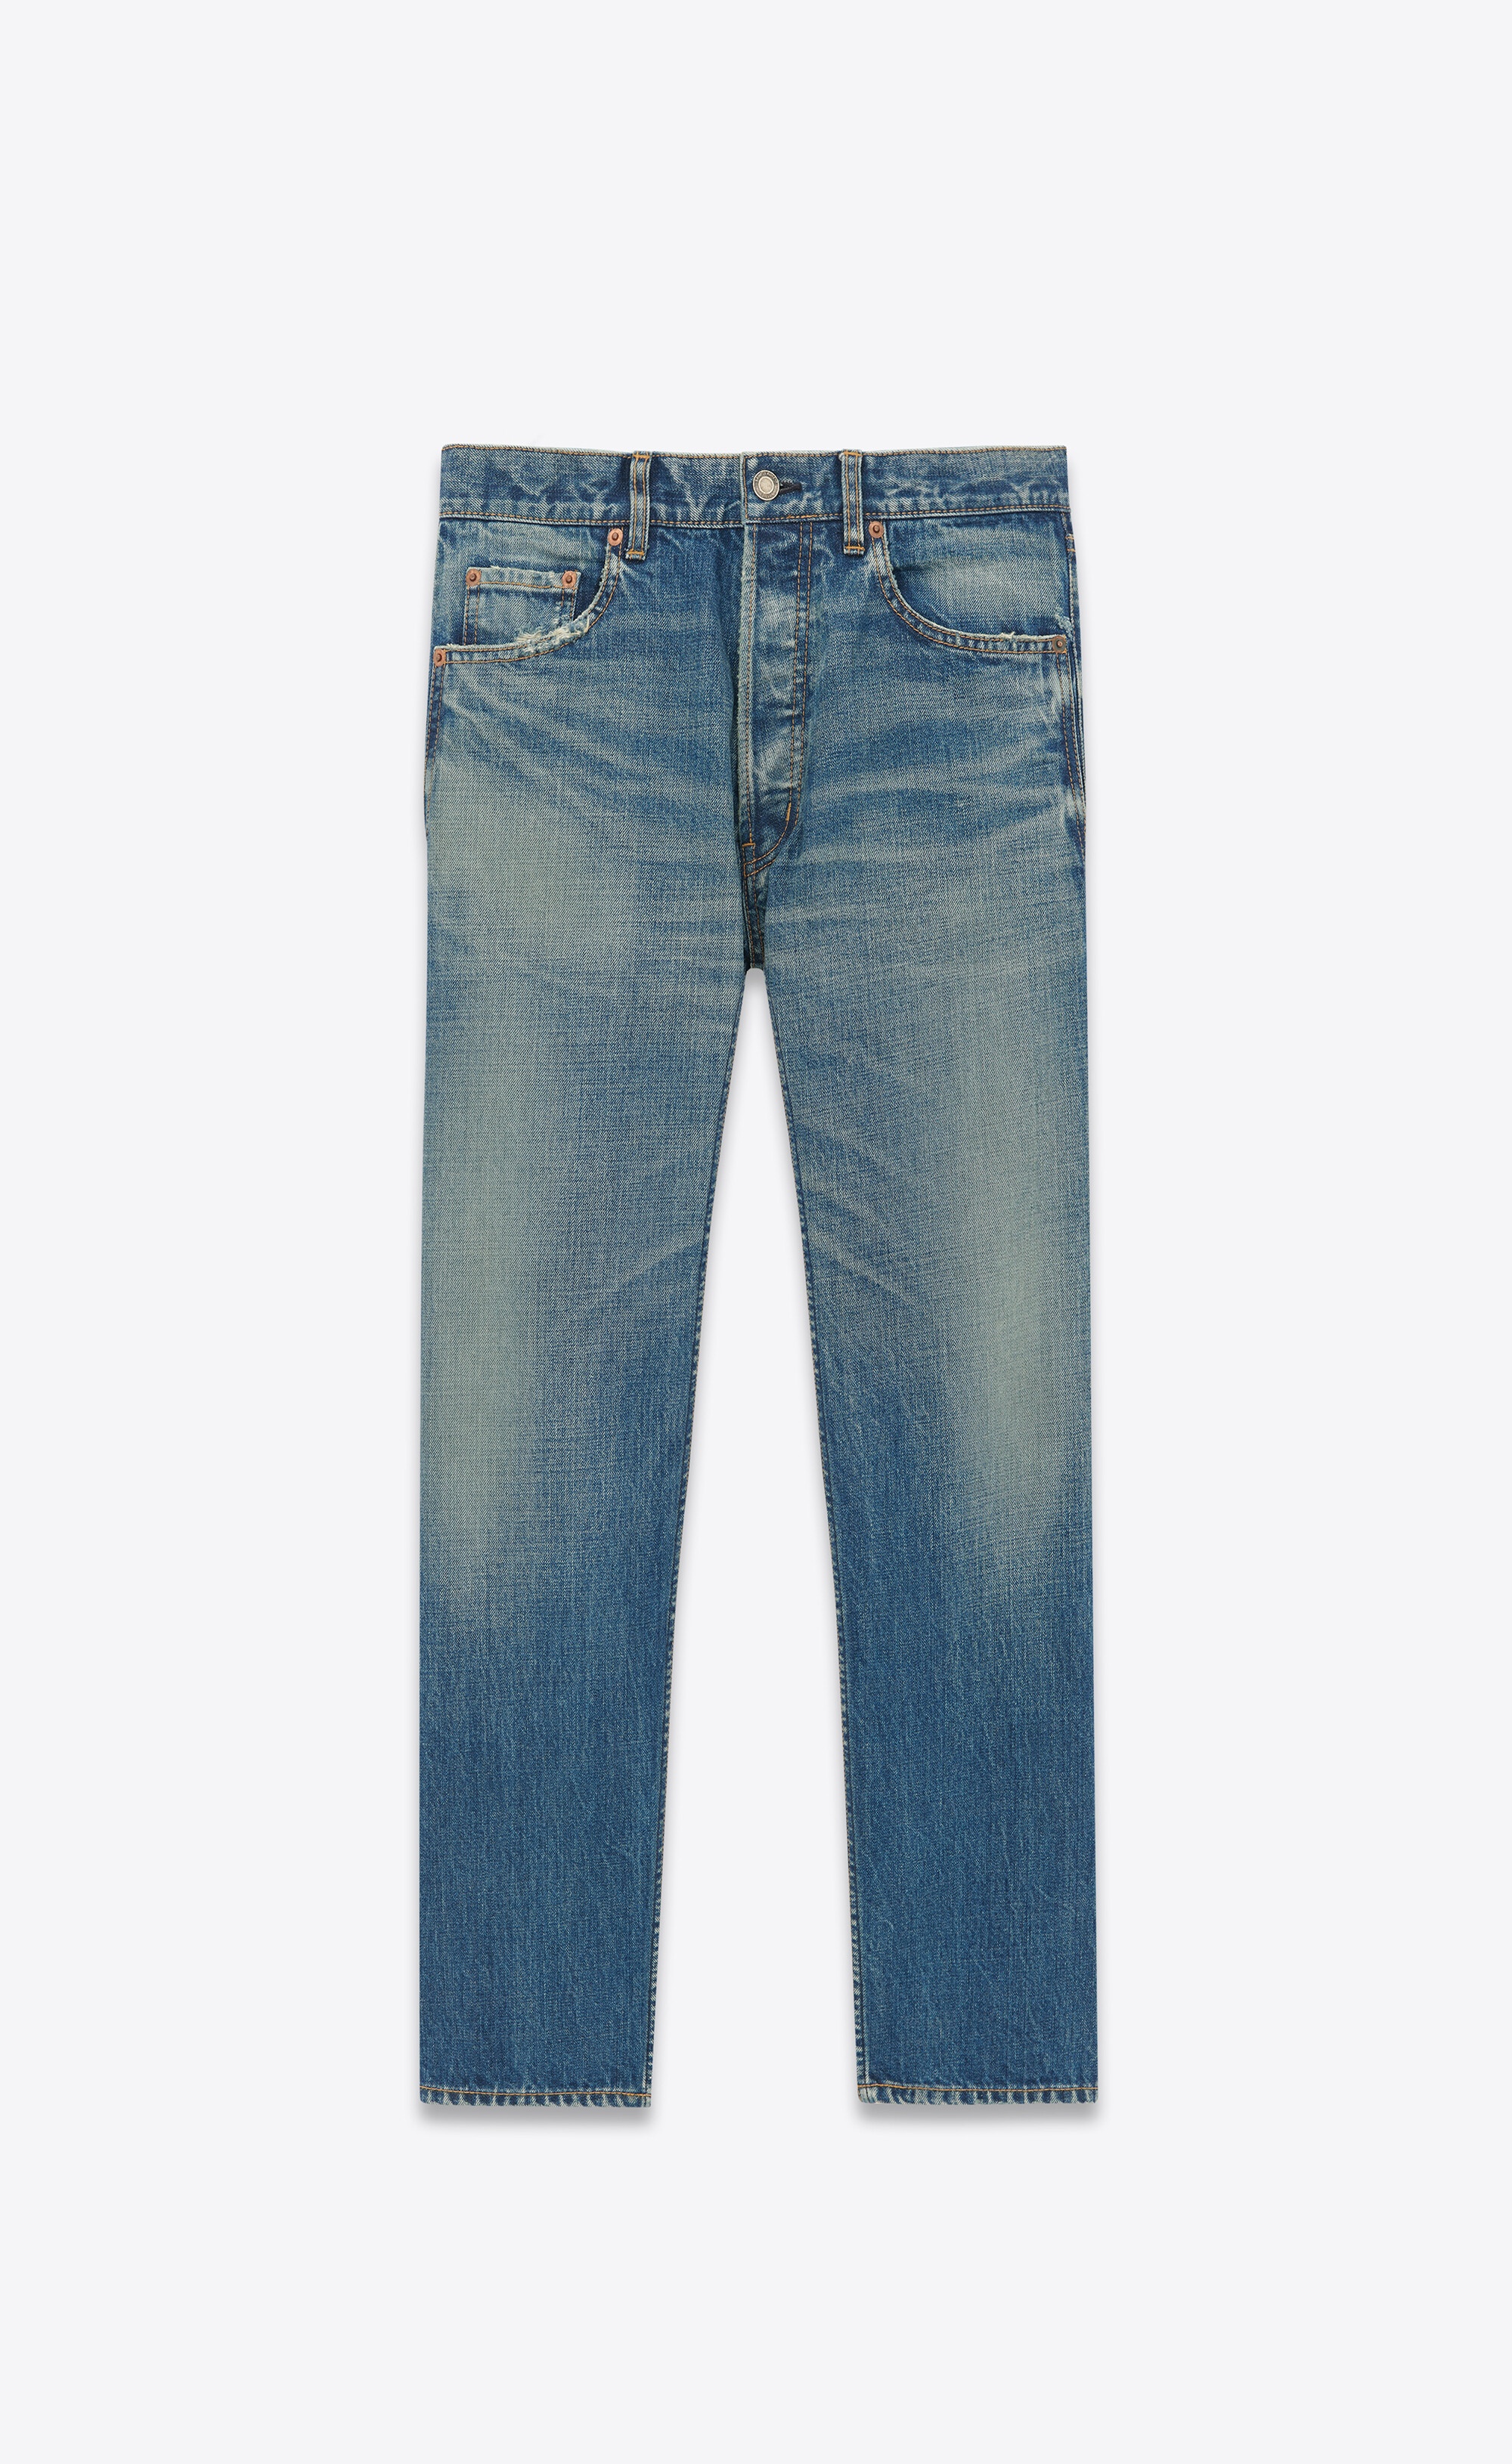 mick jeans in vintage blue - 1